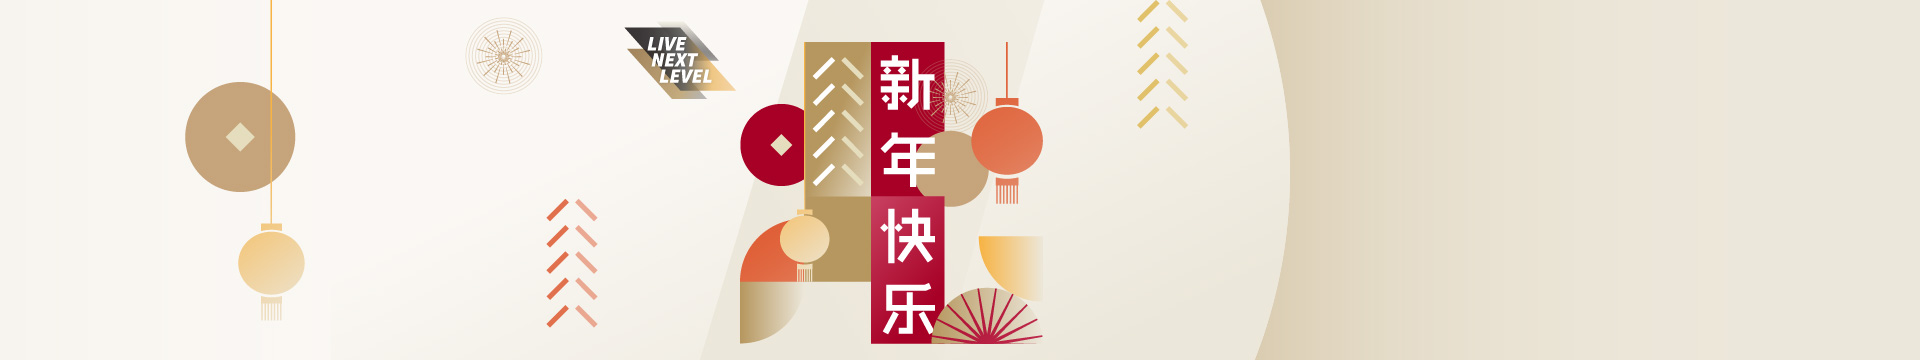 23042017_SEA_Seminars_Promotion_Chinese_New_Year_Wish_Website_banner_v2